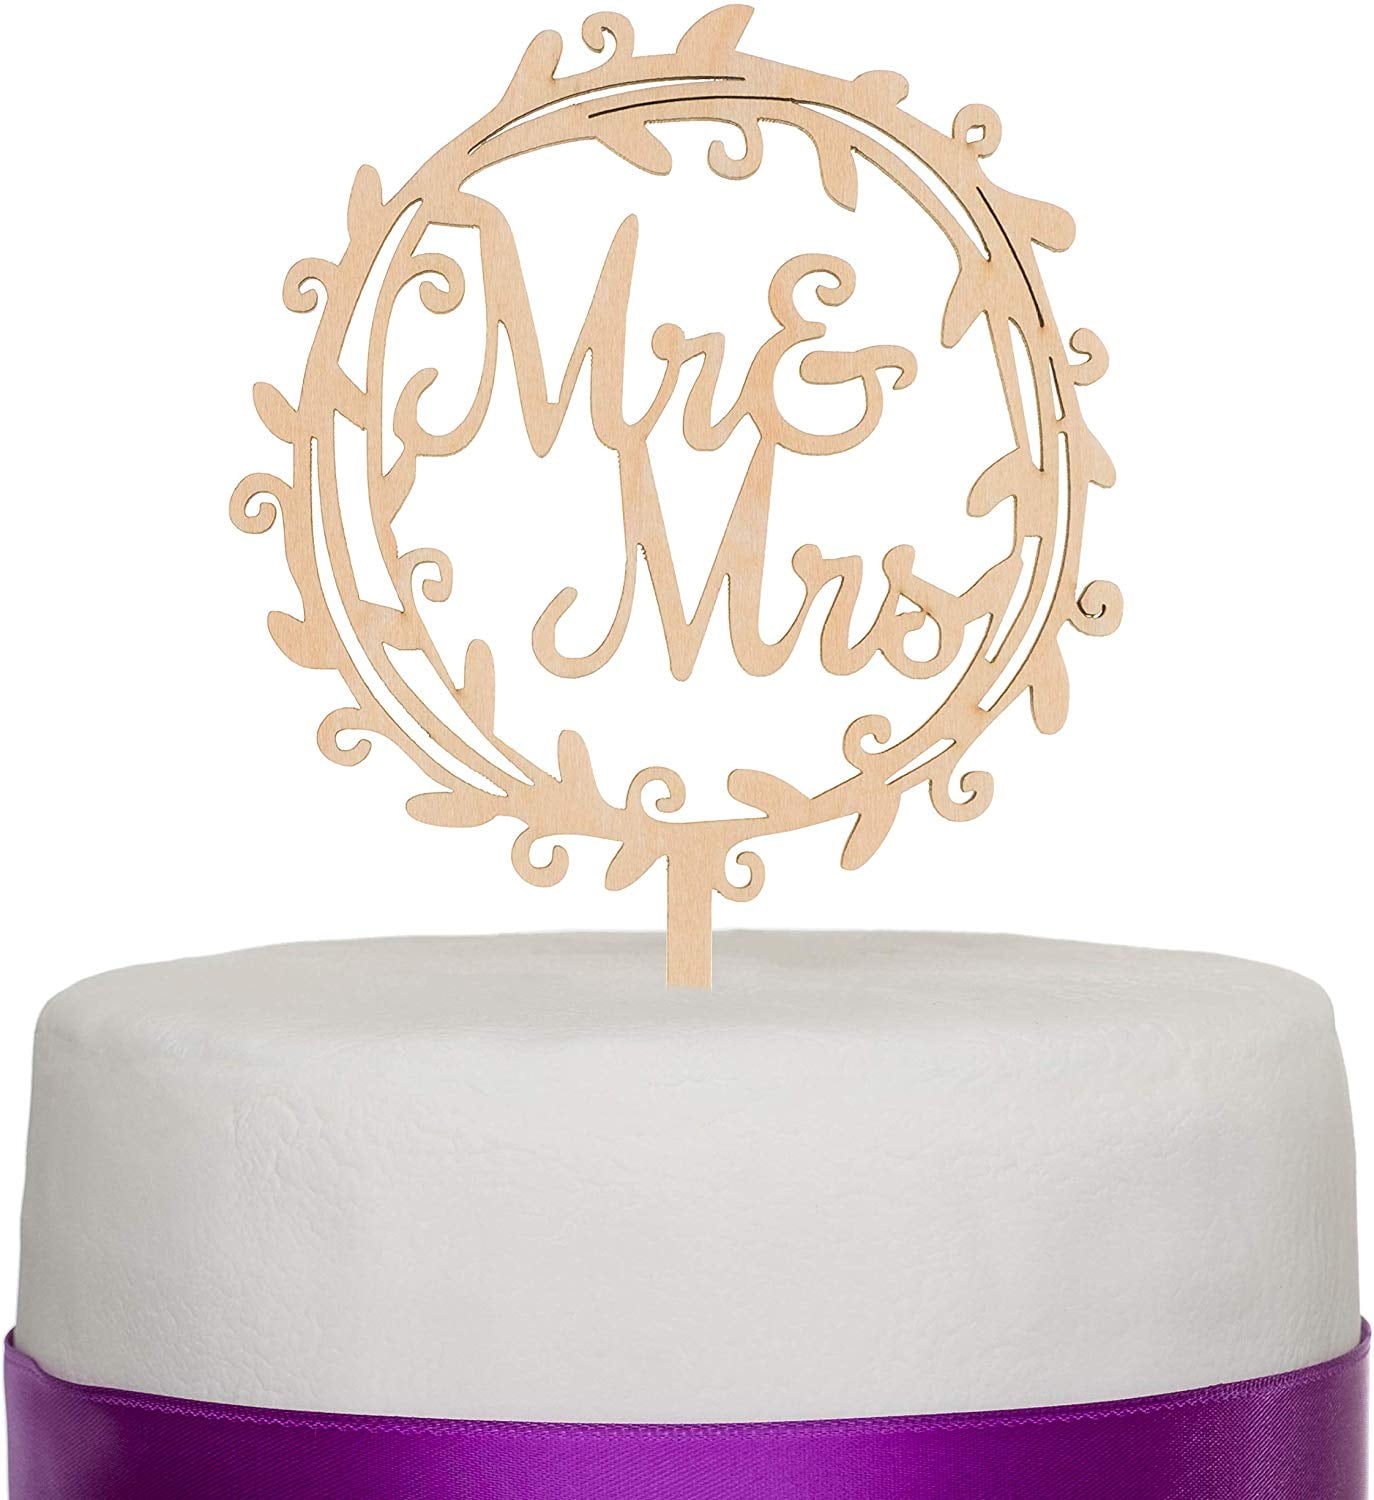 Economic Mr&Mrs Romantic Shiny Cake Topper Wedding Party Top Letter Decor US 